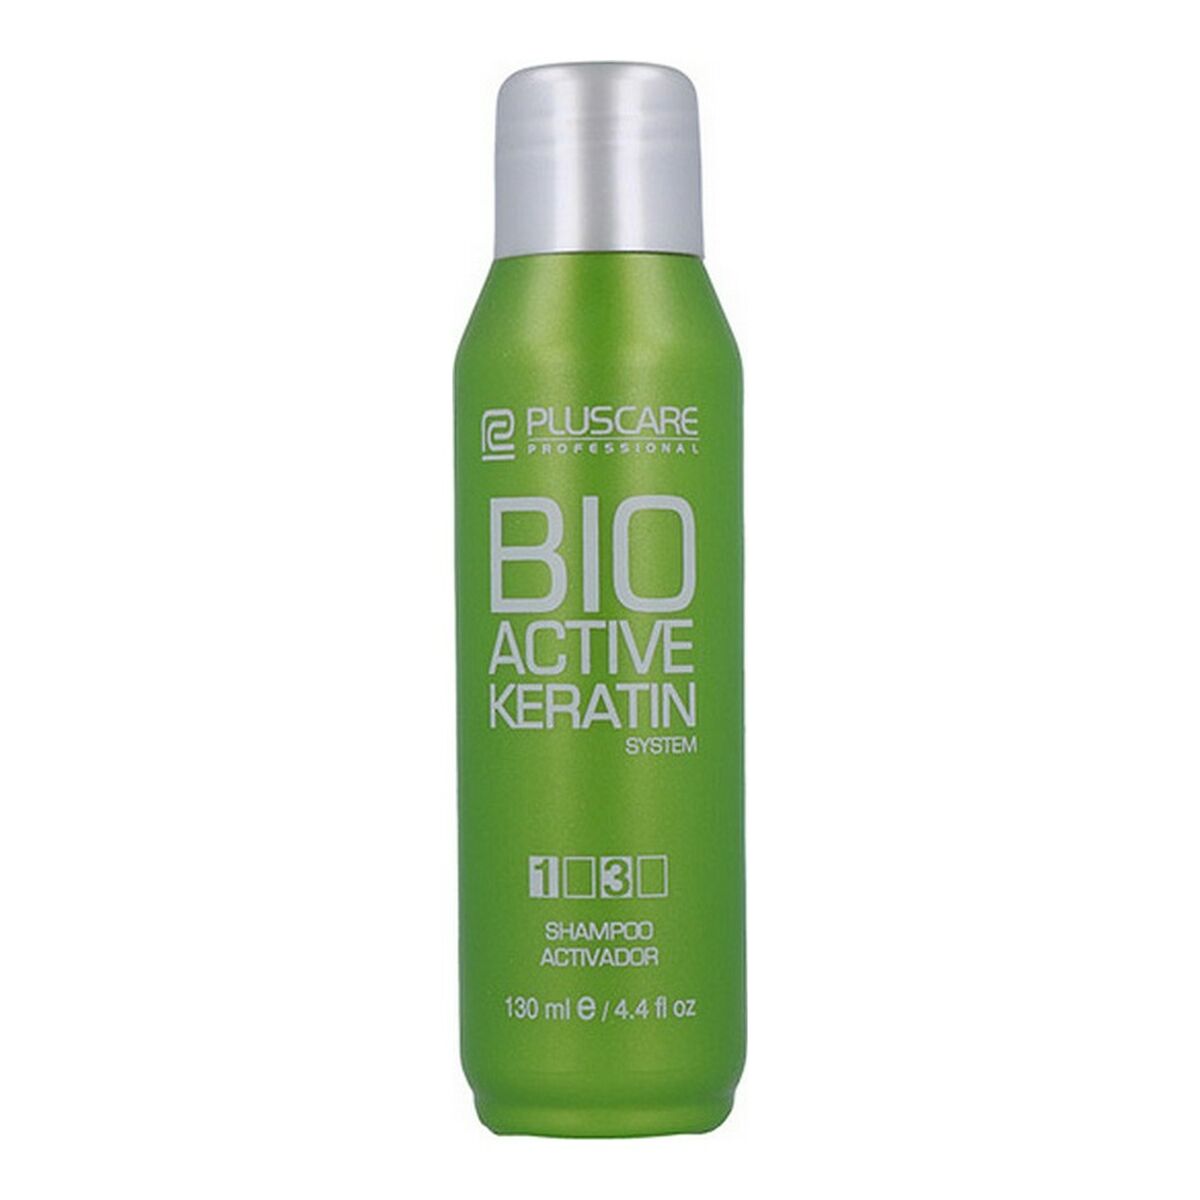 Shampoo Active Keratin Biocare (130 ml)